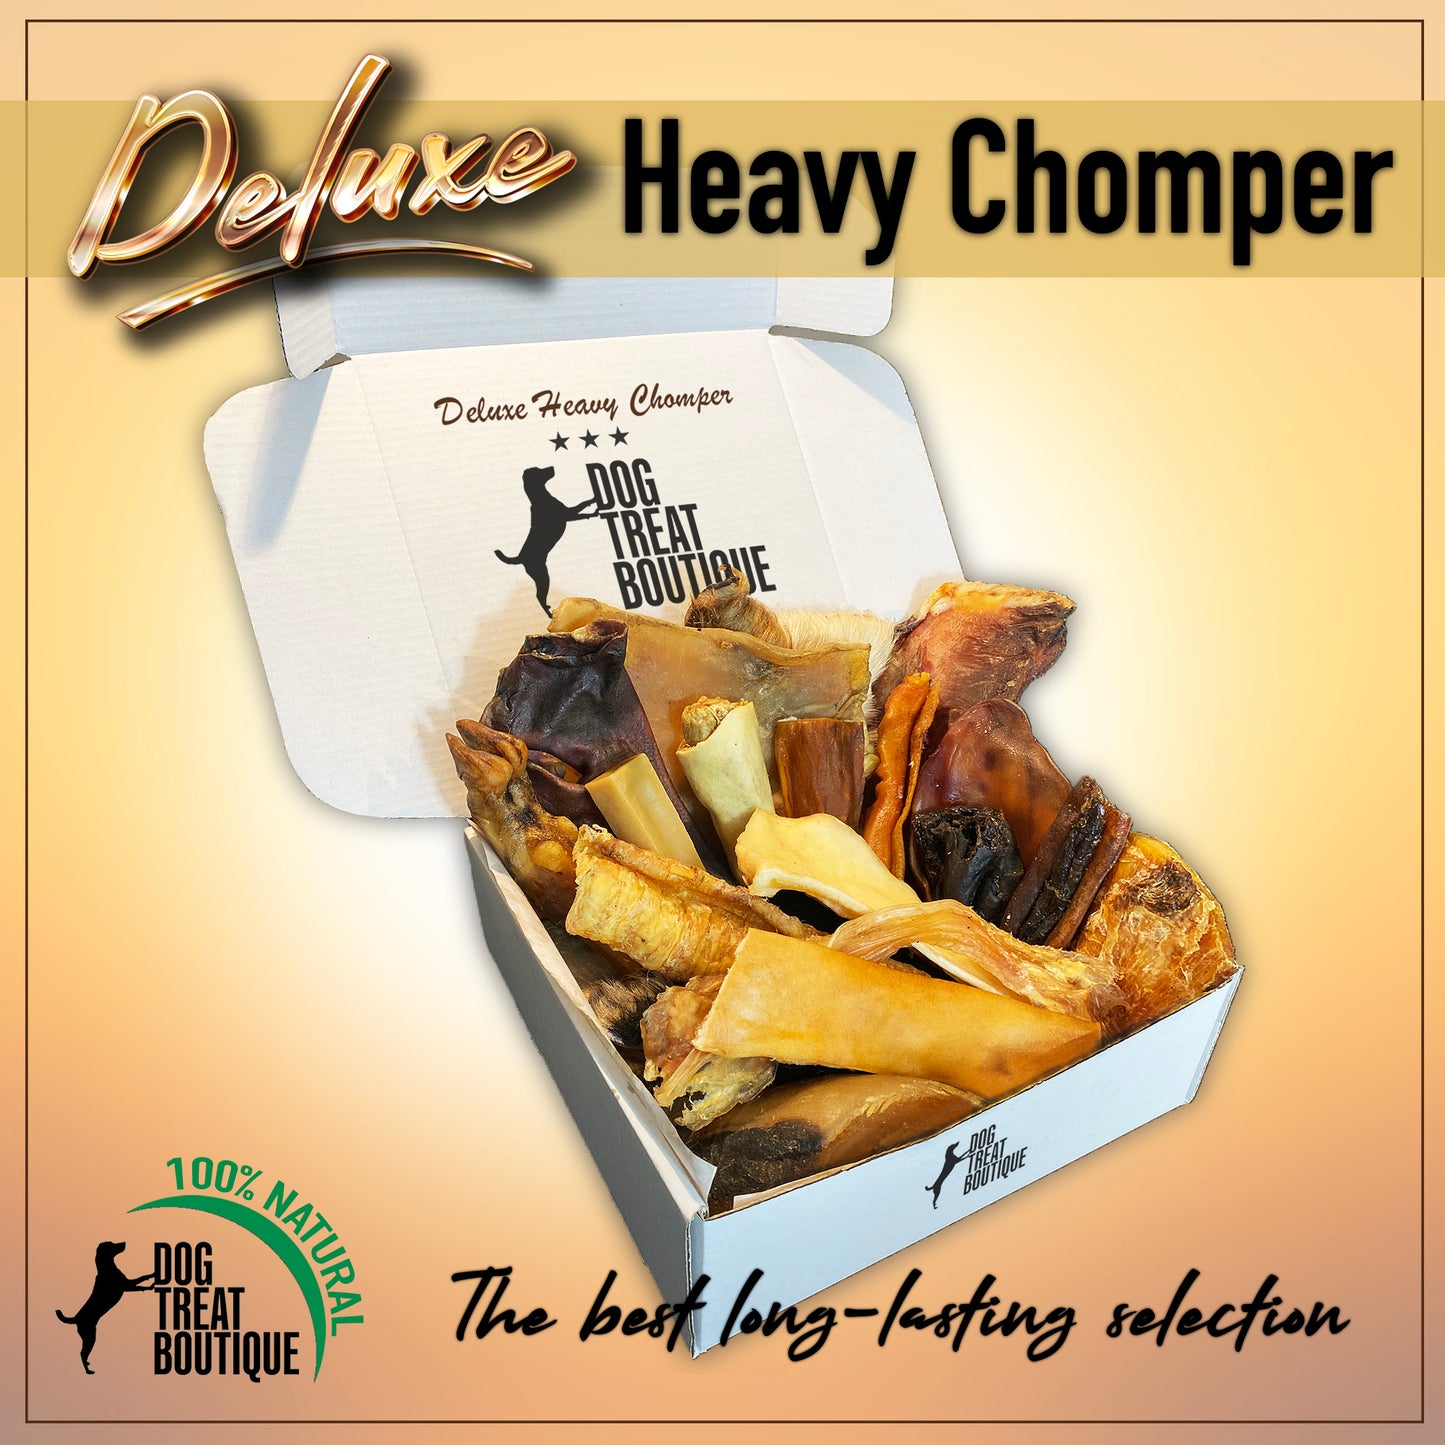 Deluxe Heavy Chomper